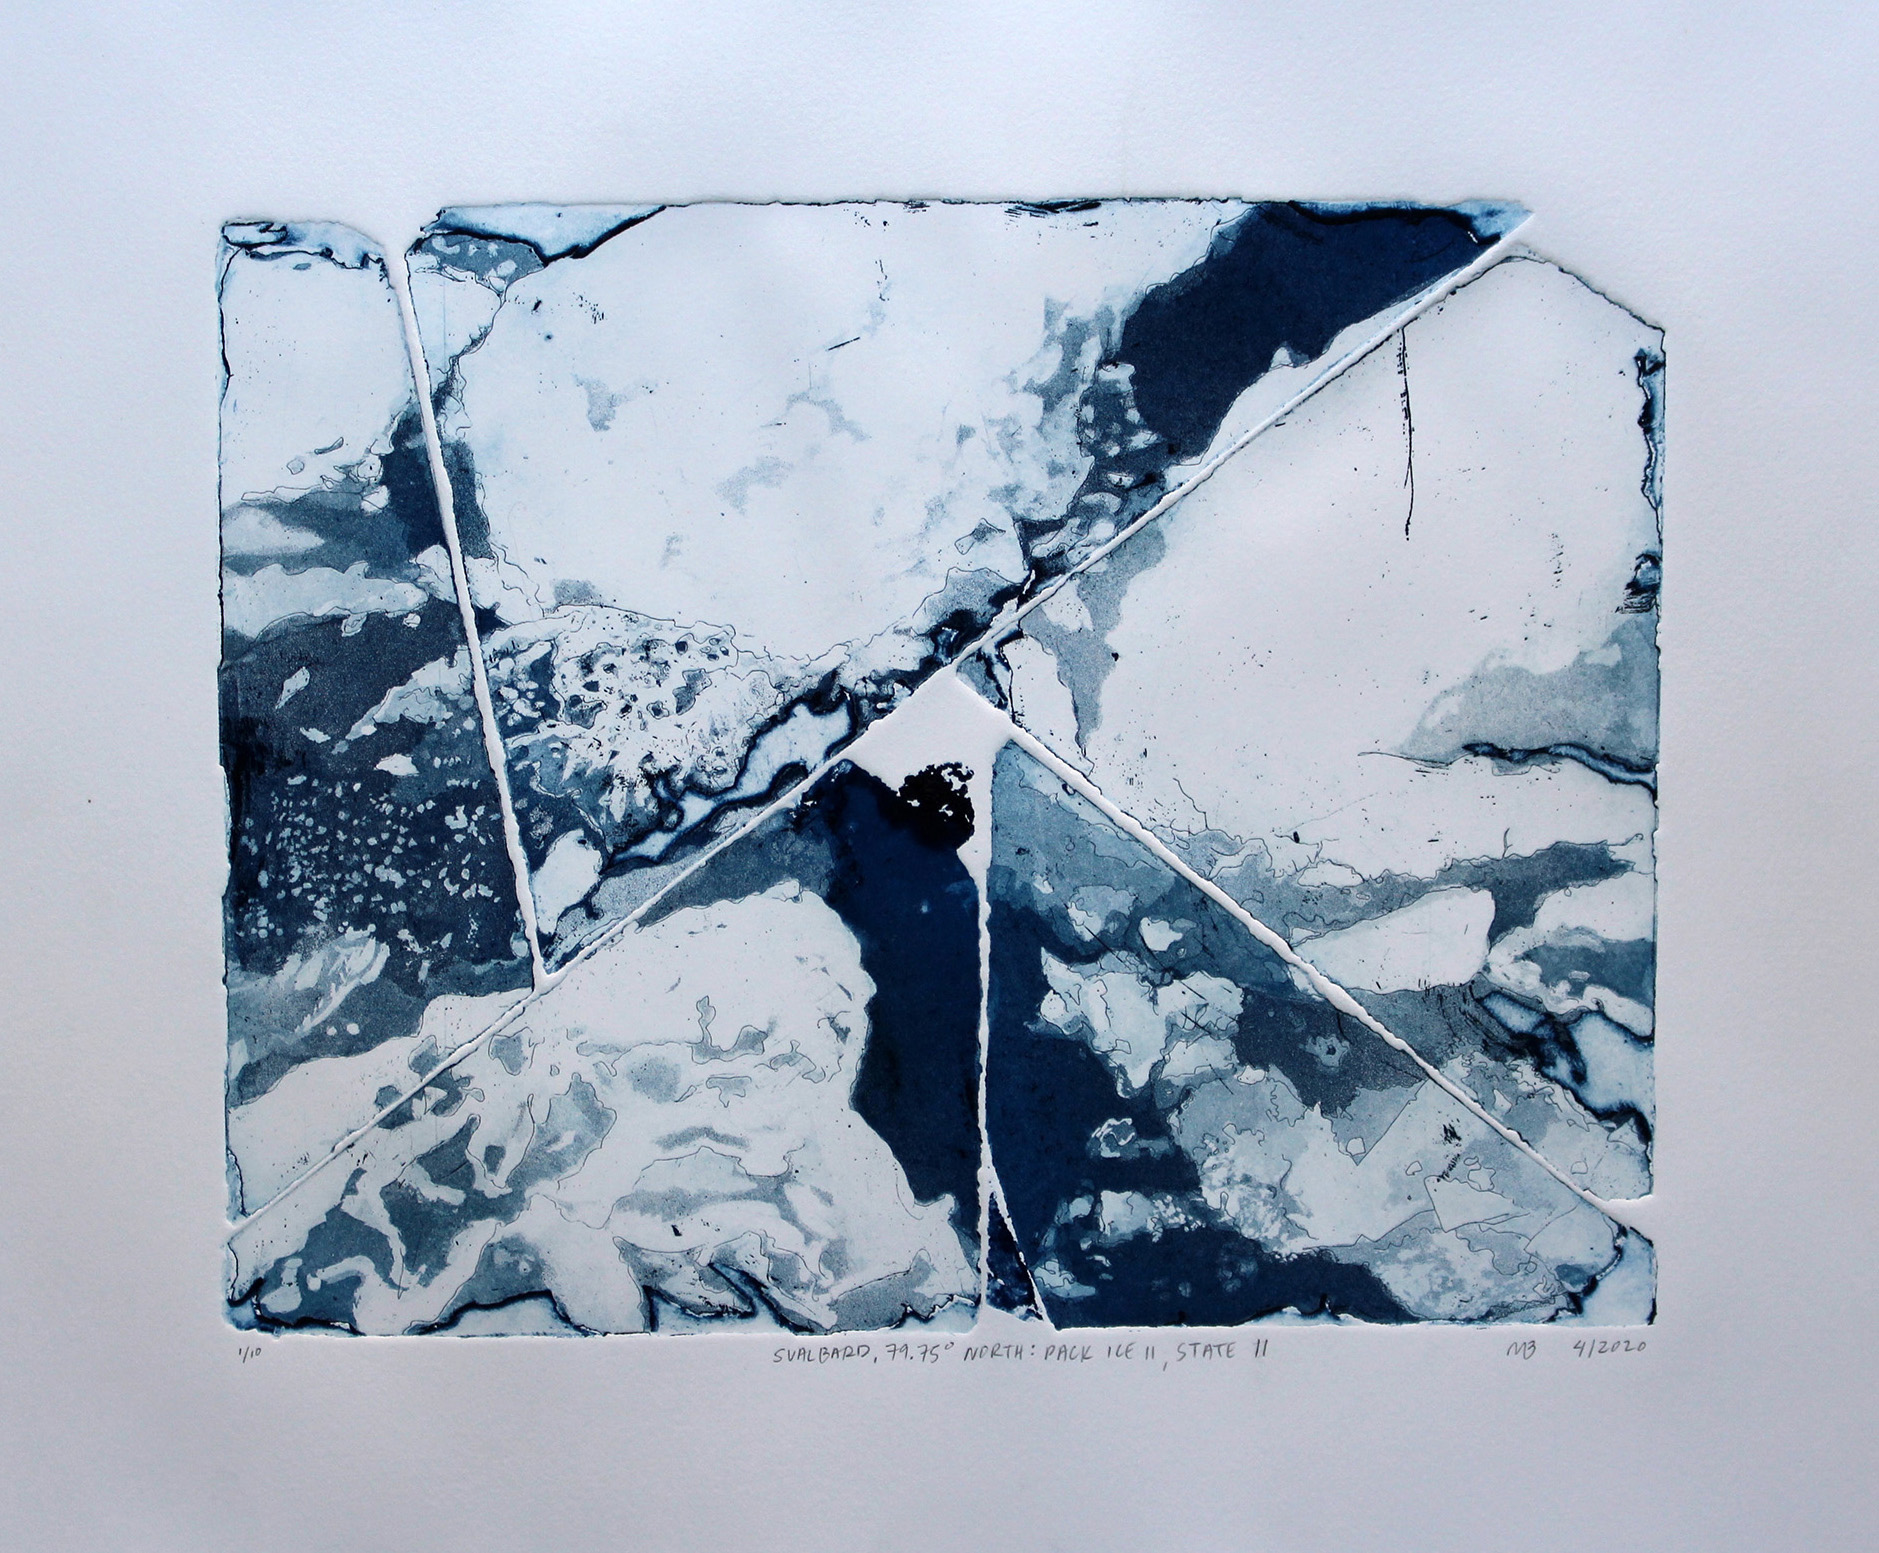 Megan Broughton; Svalbard, 79.75° North, Pack Ice II, State II; intaglio hardground etching and aquatint; 18 x 21 in; 2020